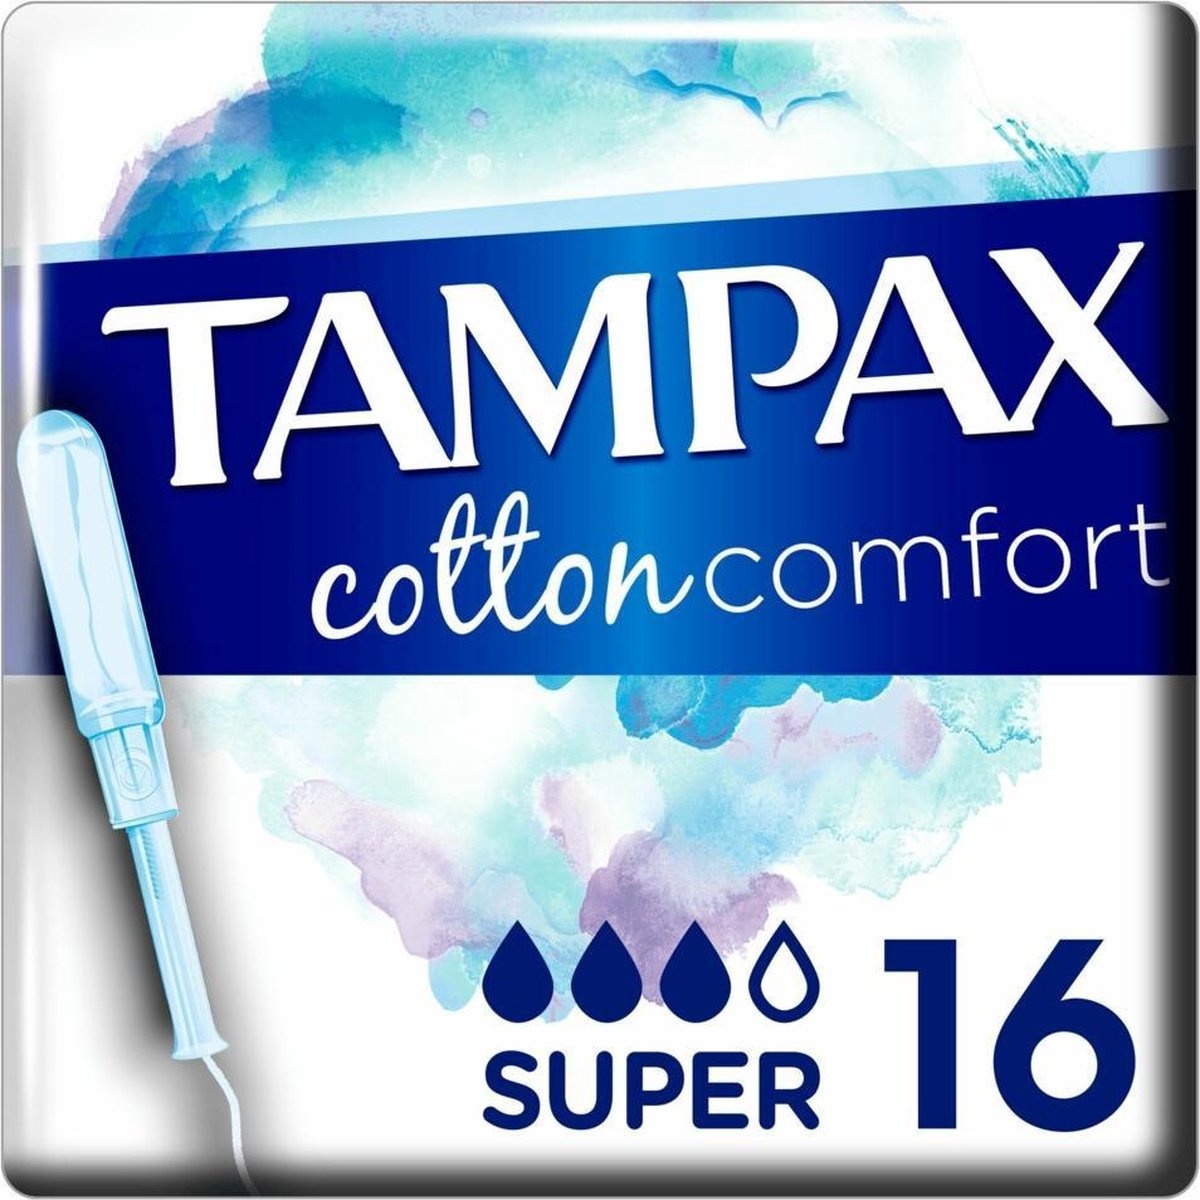 Tampax Cotton Comfort Super 16 pcs